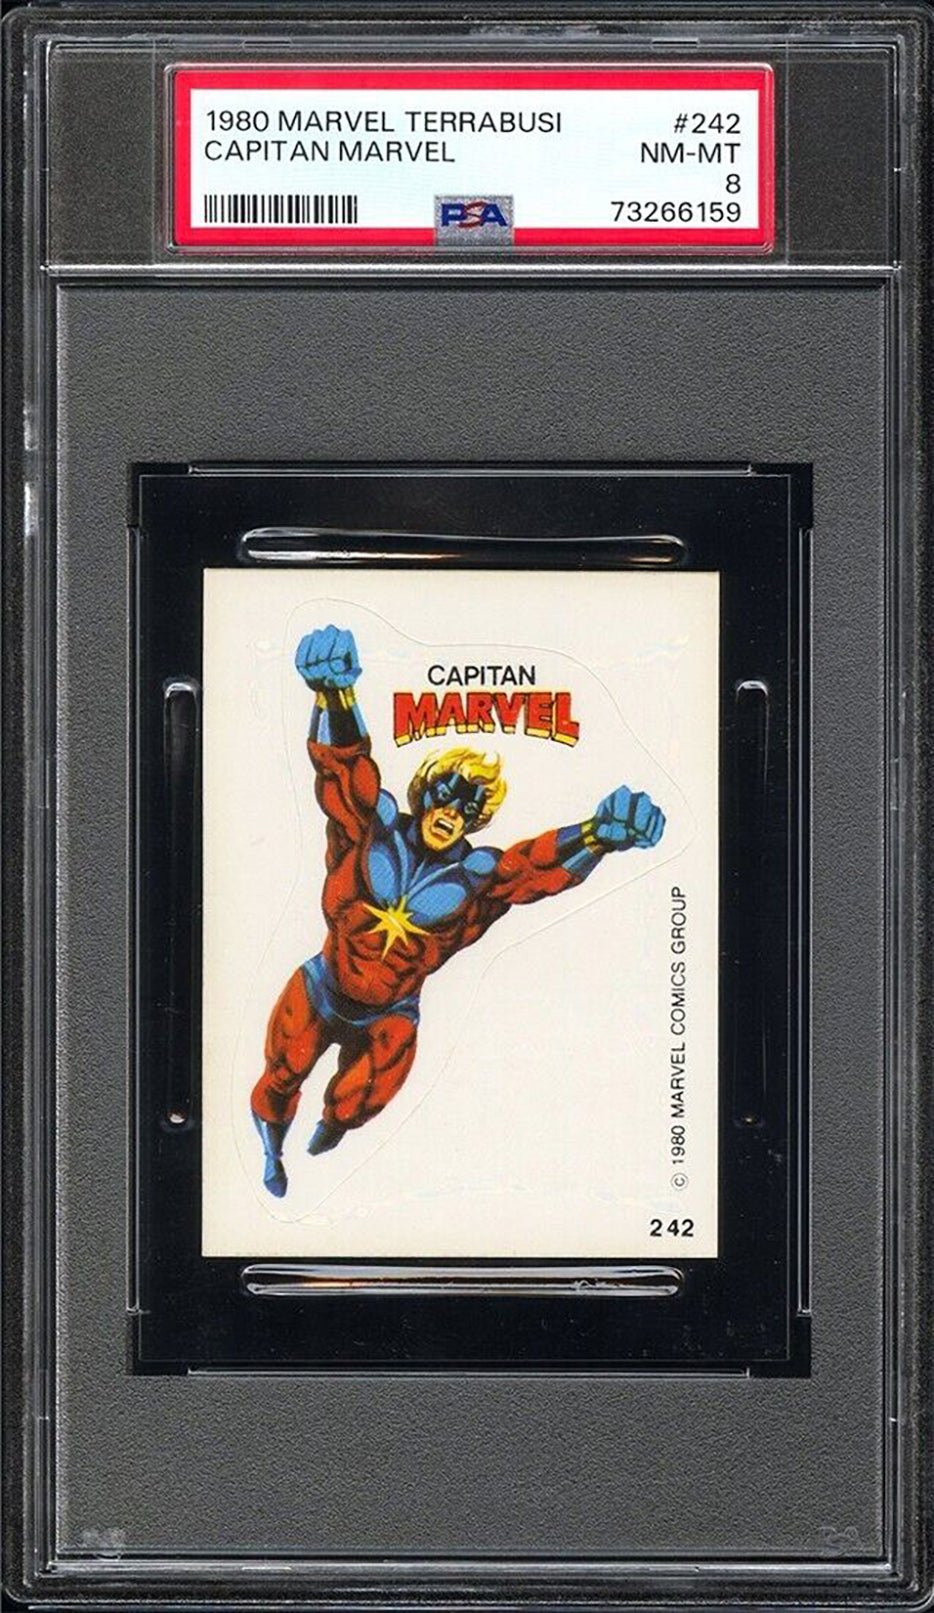 CAPTAIN MARVEL PSA 8 1980 Terrabusi Marvel Superheroes Sticker #242 Marvel Graded Cards Sticker - Hobby Gems